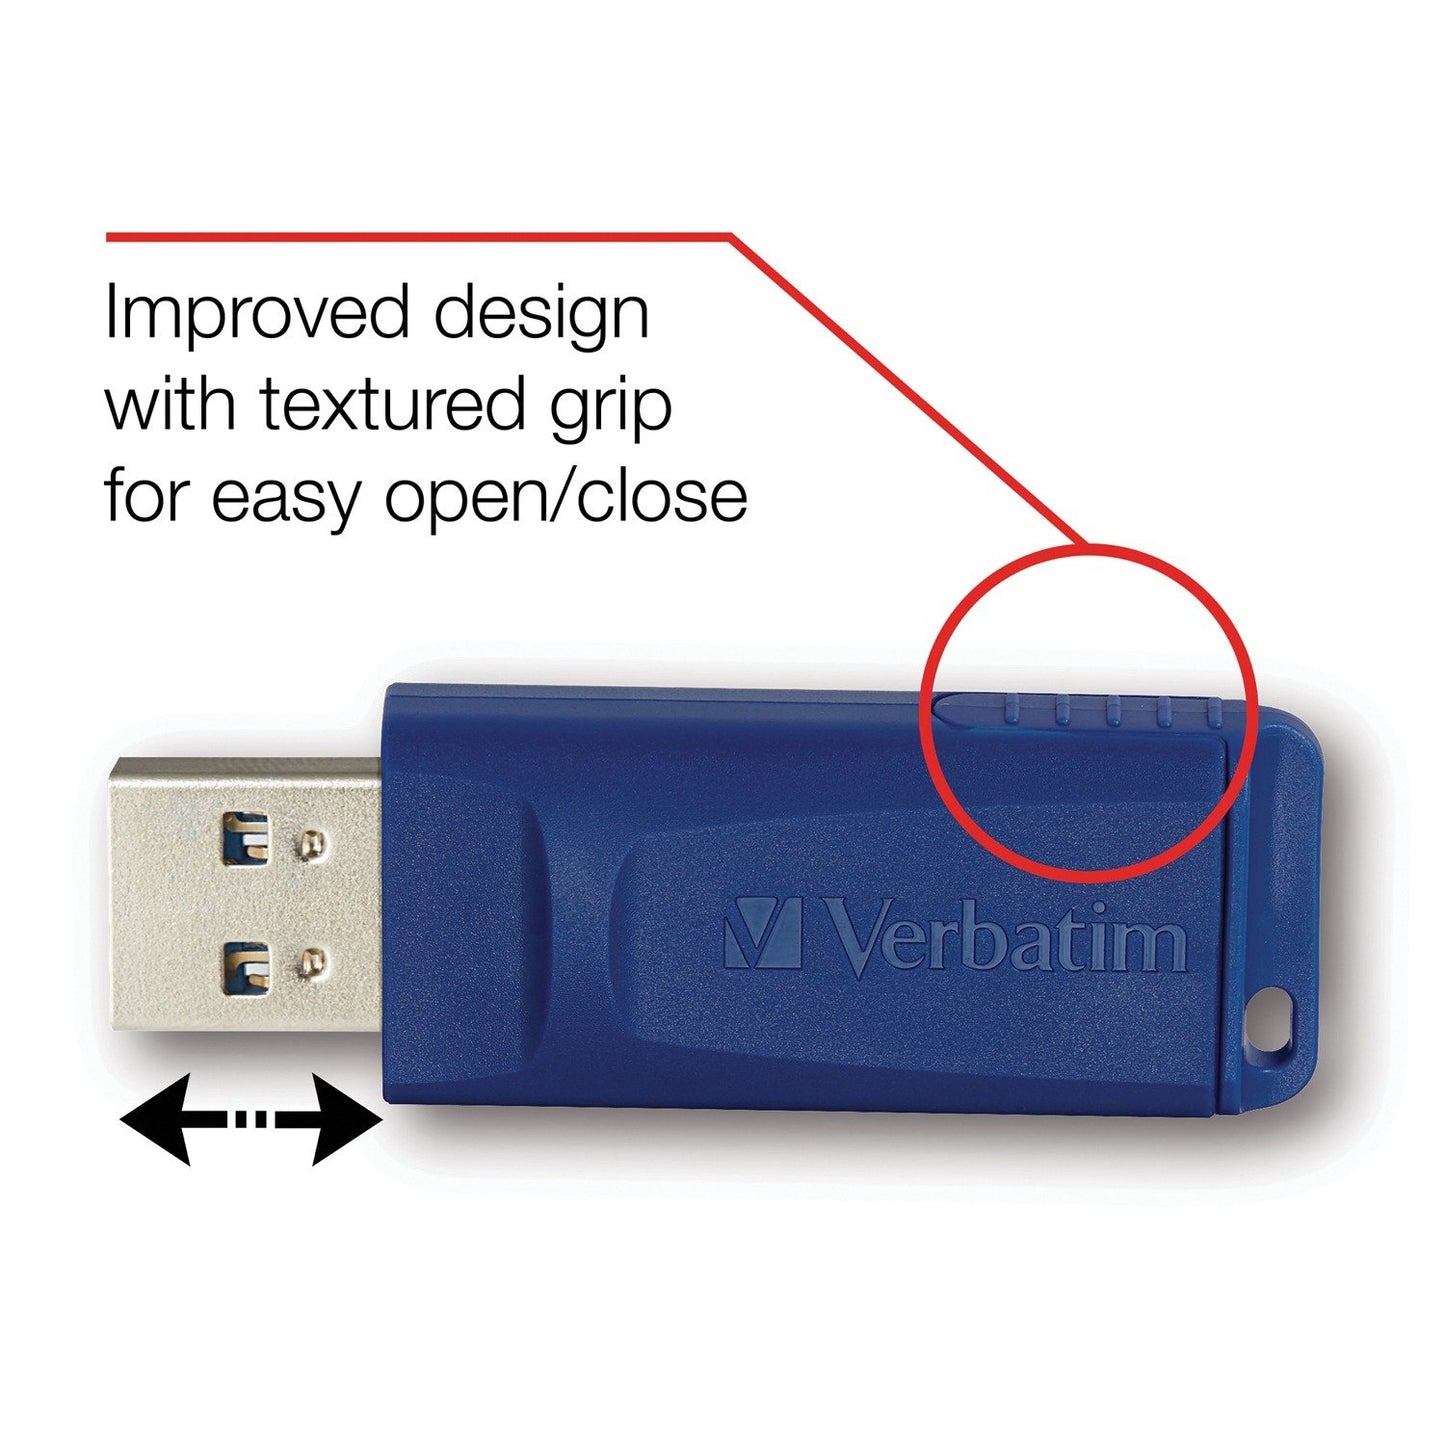 Verbatim 98713 16GB Store 'n' Go USB Flash Drive (2 pk; Blue & Green)